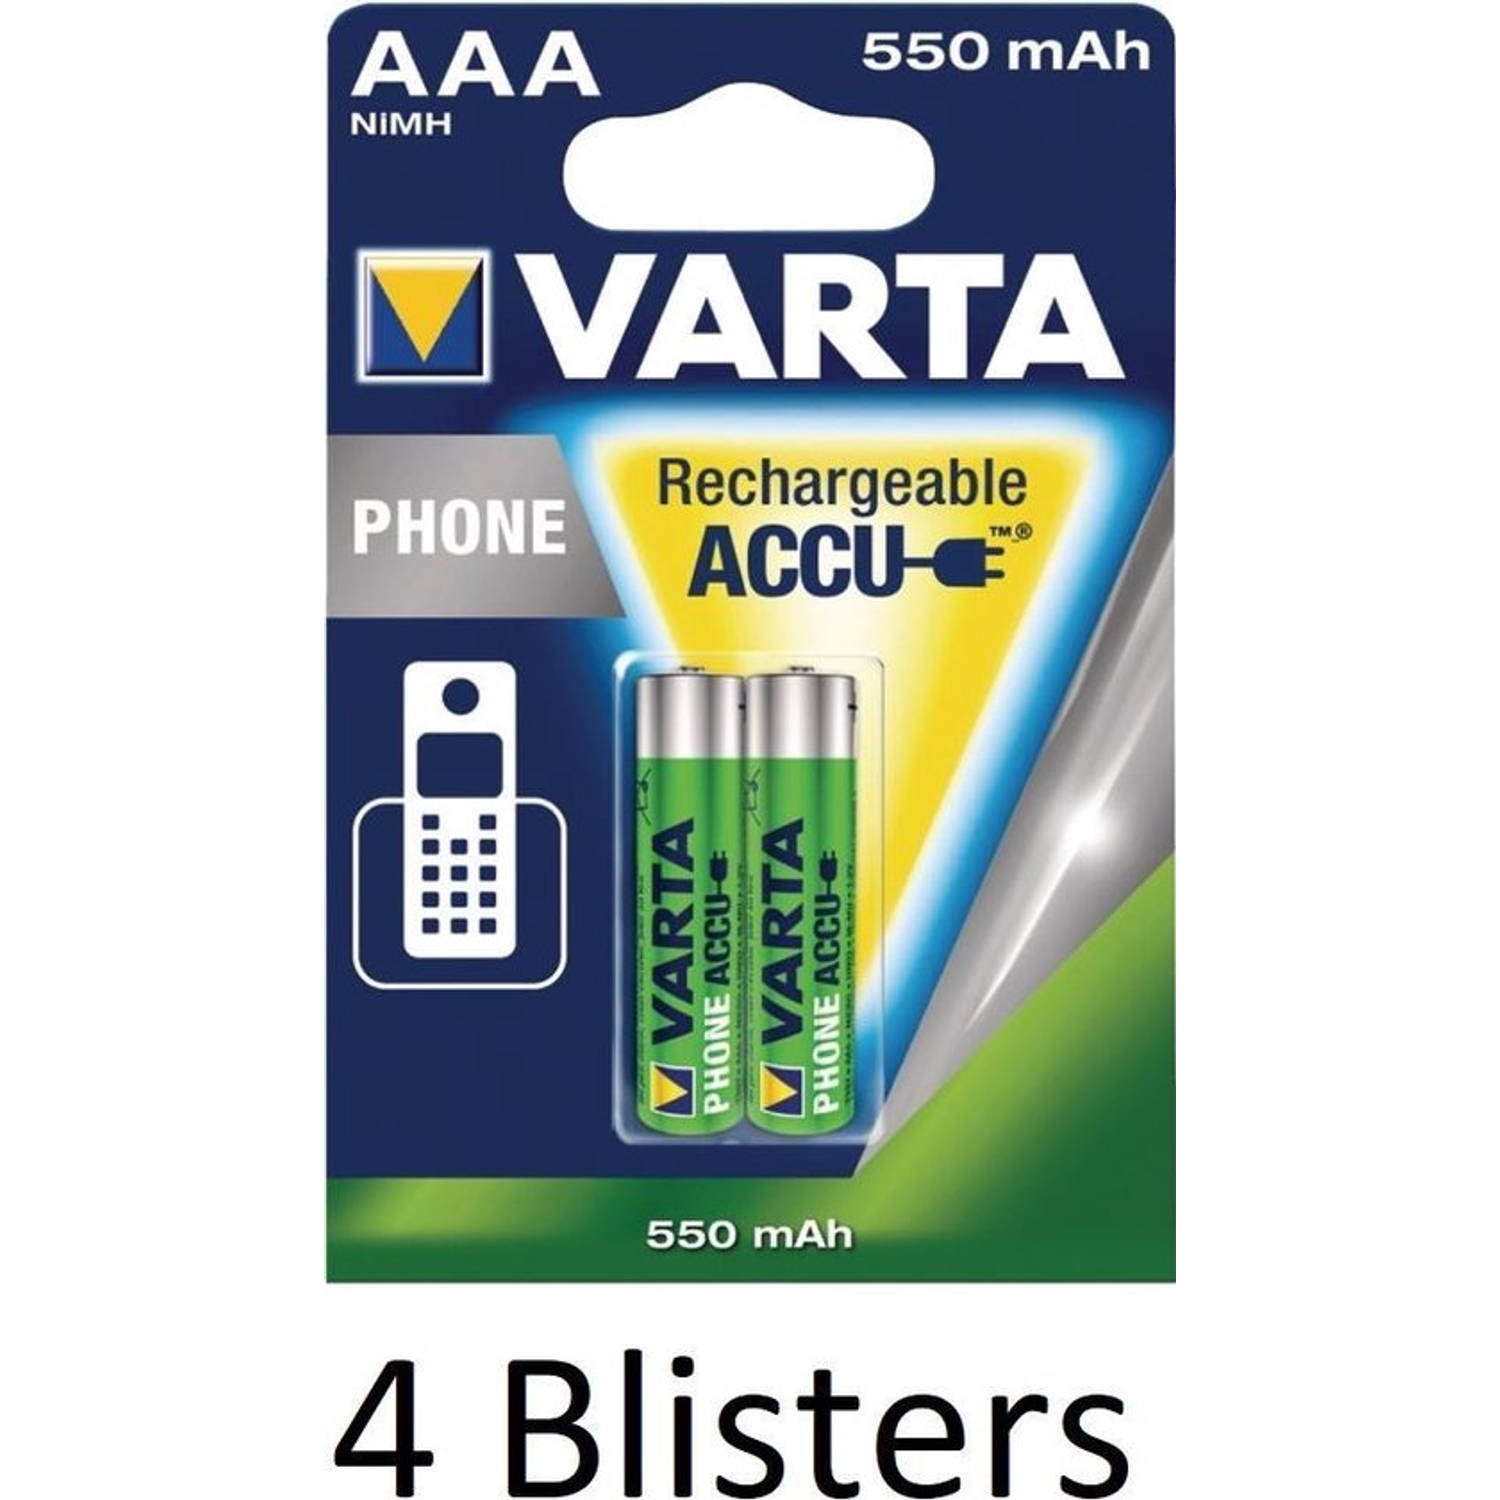 Ijveraar Plasticiteit Antipoison 8 Stuks (4 Blisters a 2 st) Varta oplaadbare batterijen AAA, 550 mAh |  Blokker